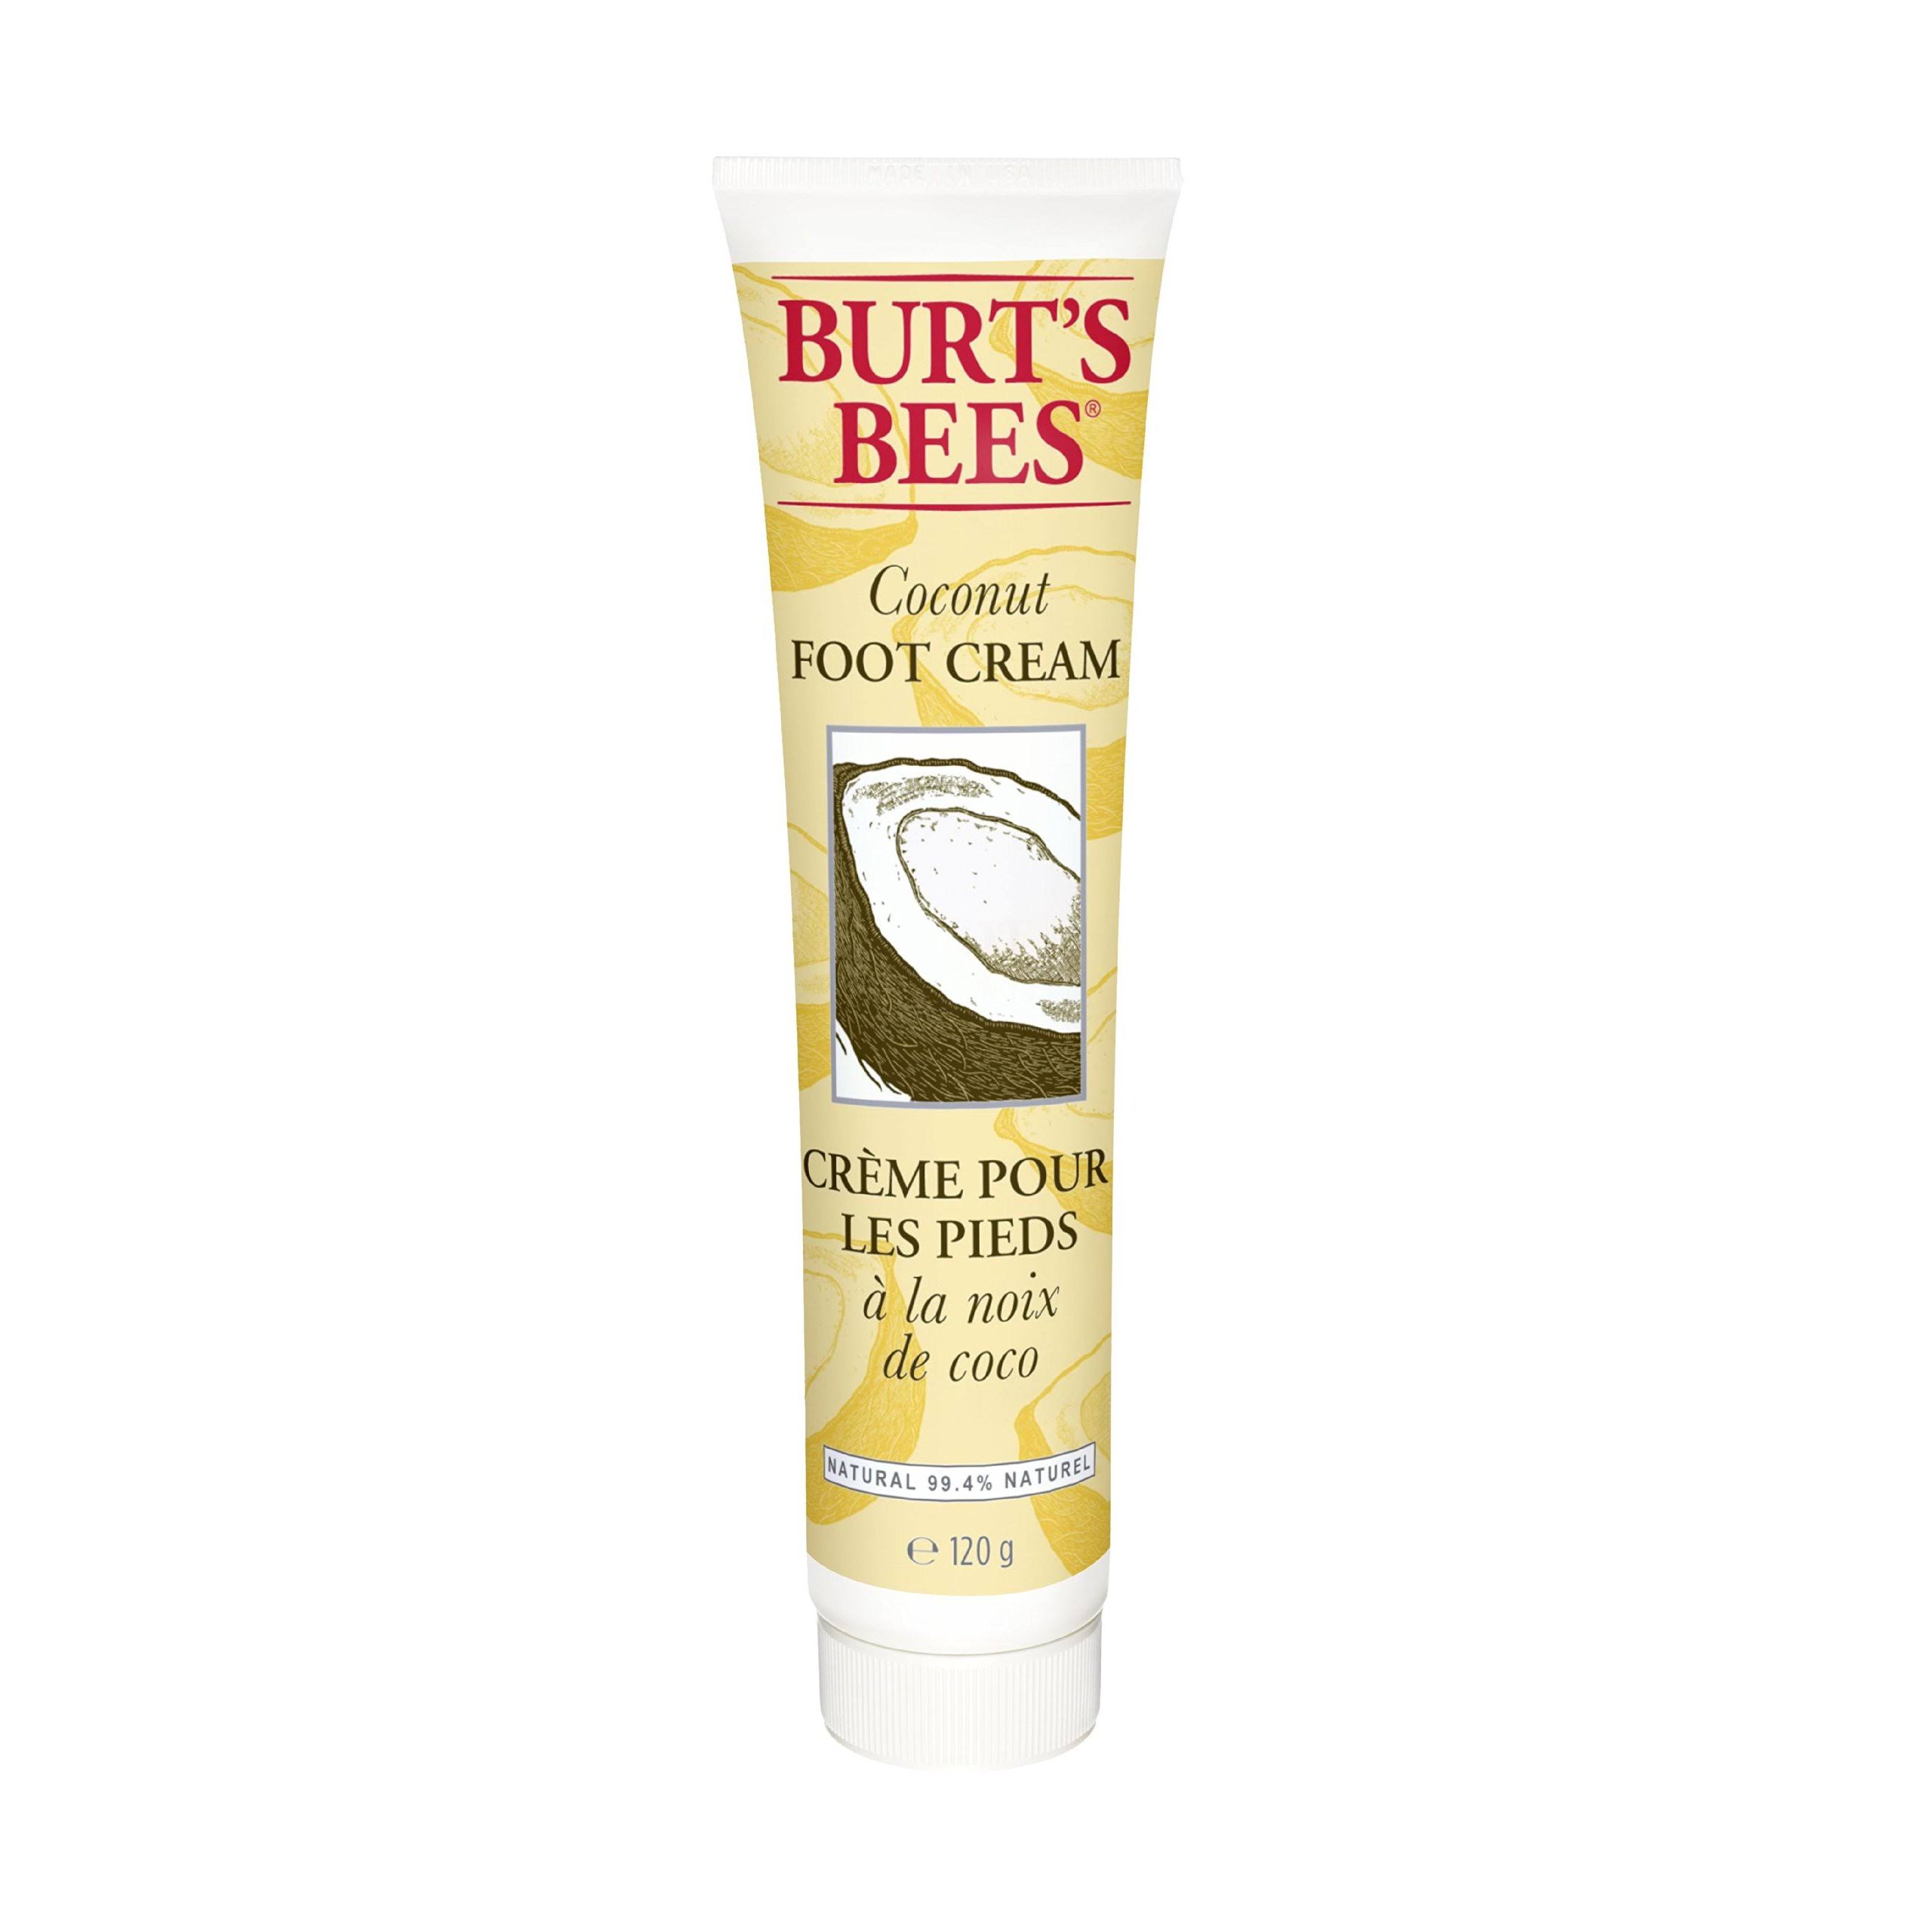 Burt's Bees Foot Cream - Coconut, 120g